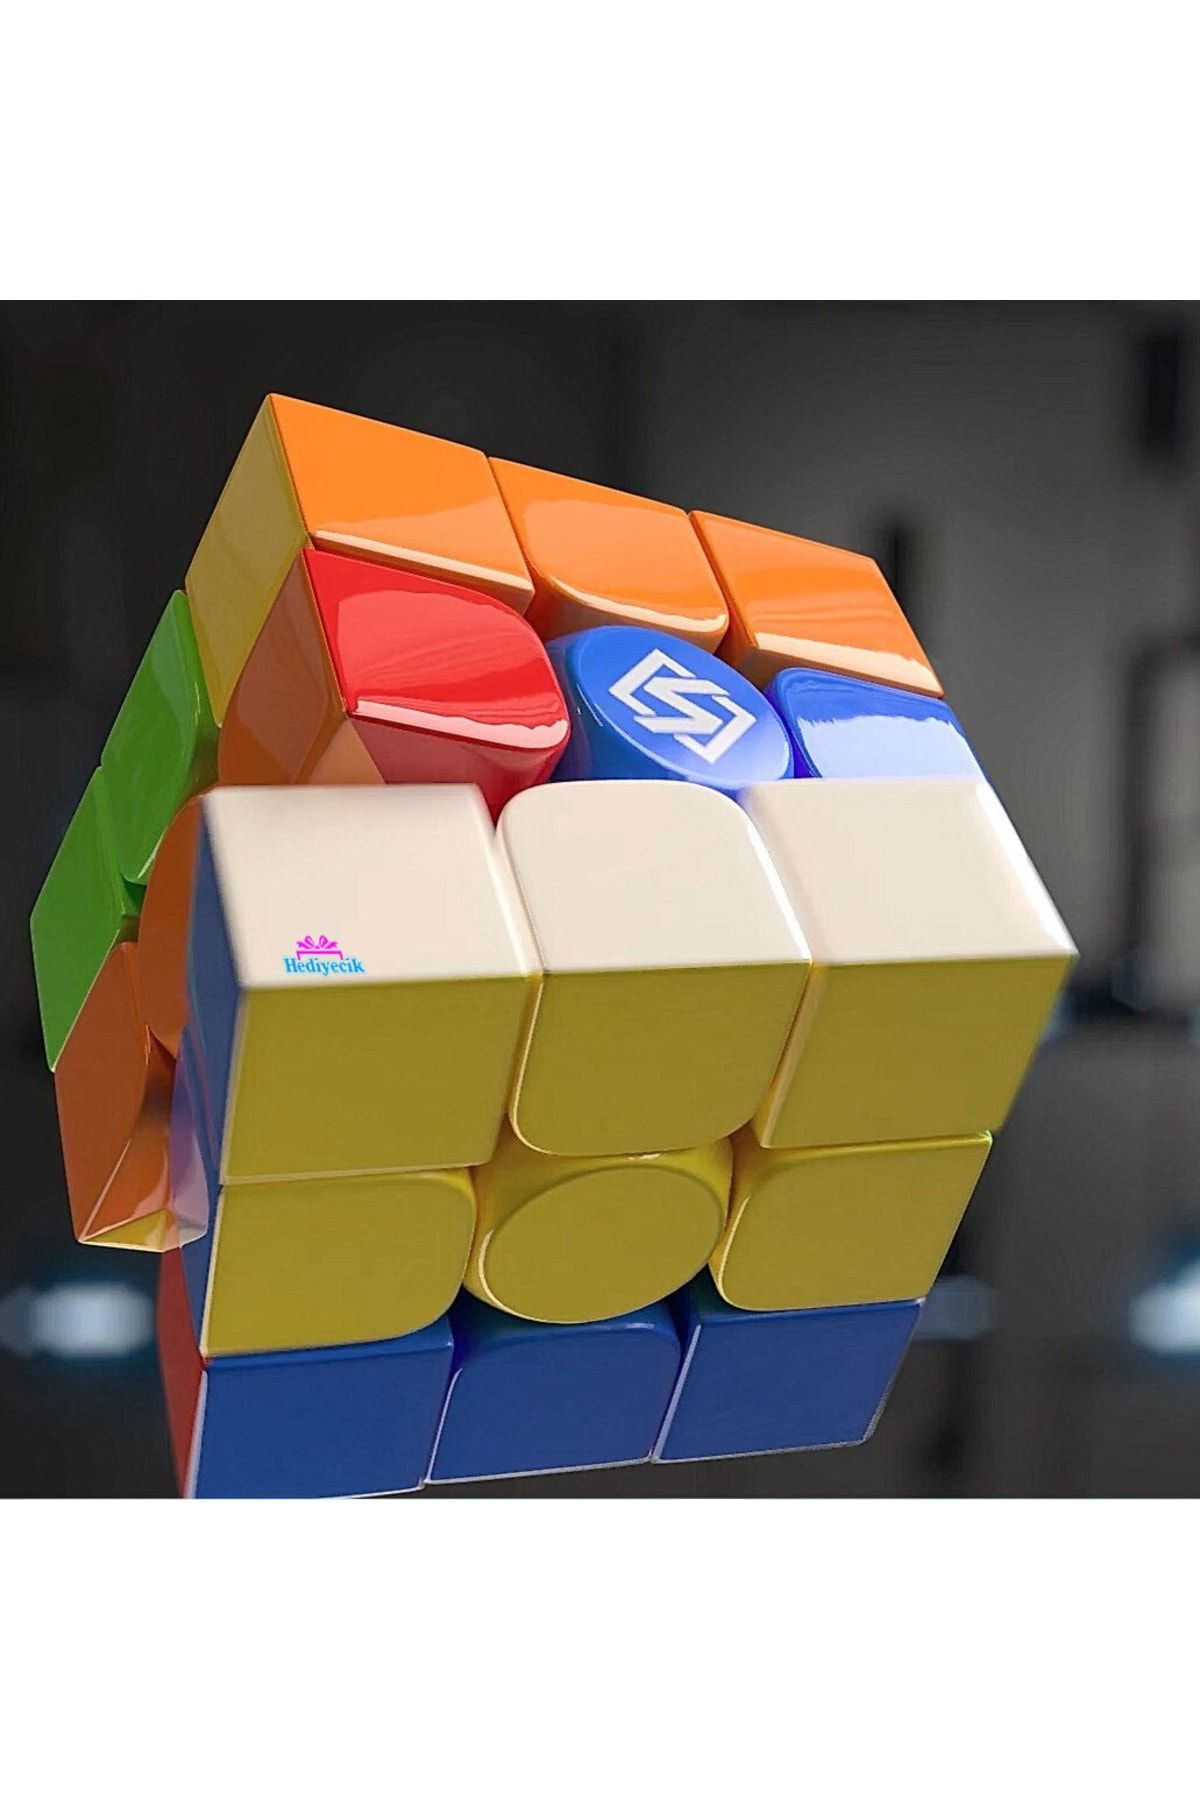 Next Cube. NEXCUBE игрушка. Next Cube inside. Next Cube Disassembly. Игра следующий кубик